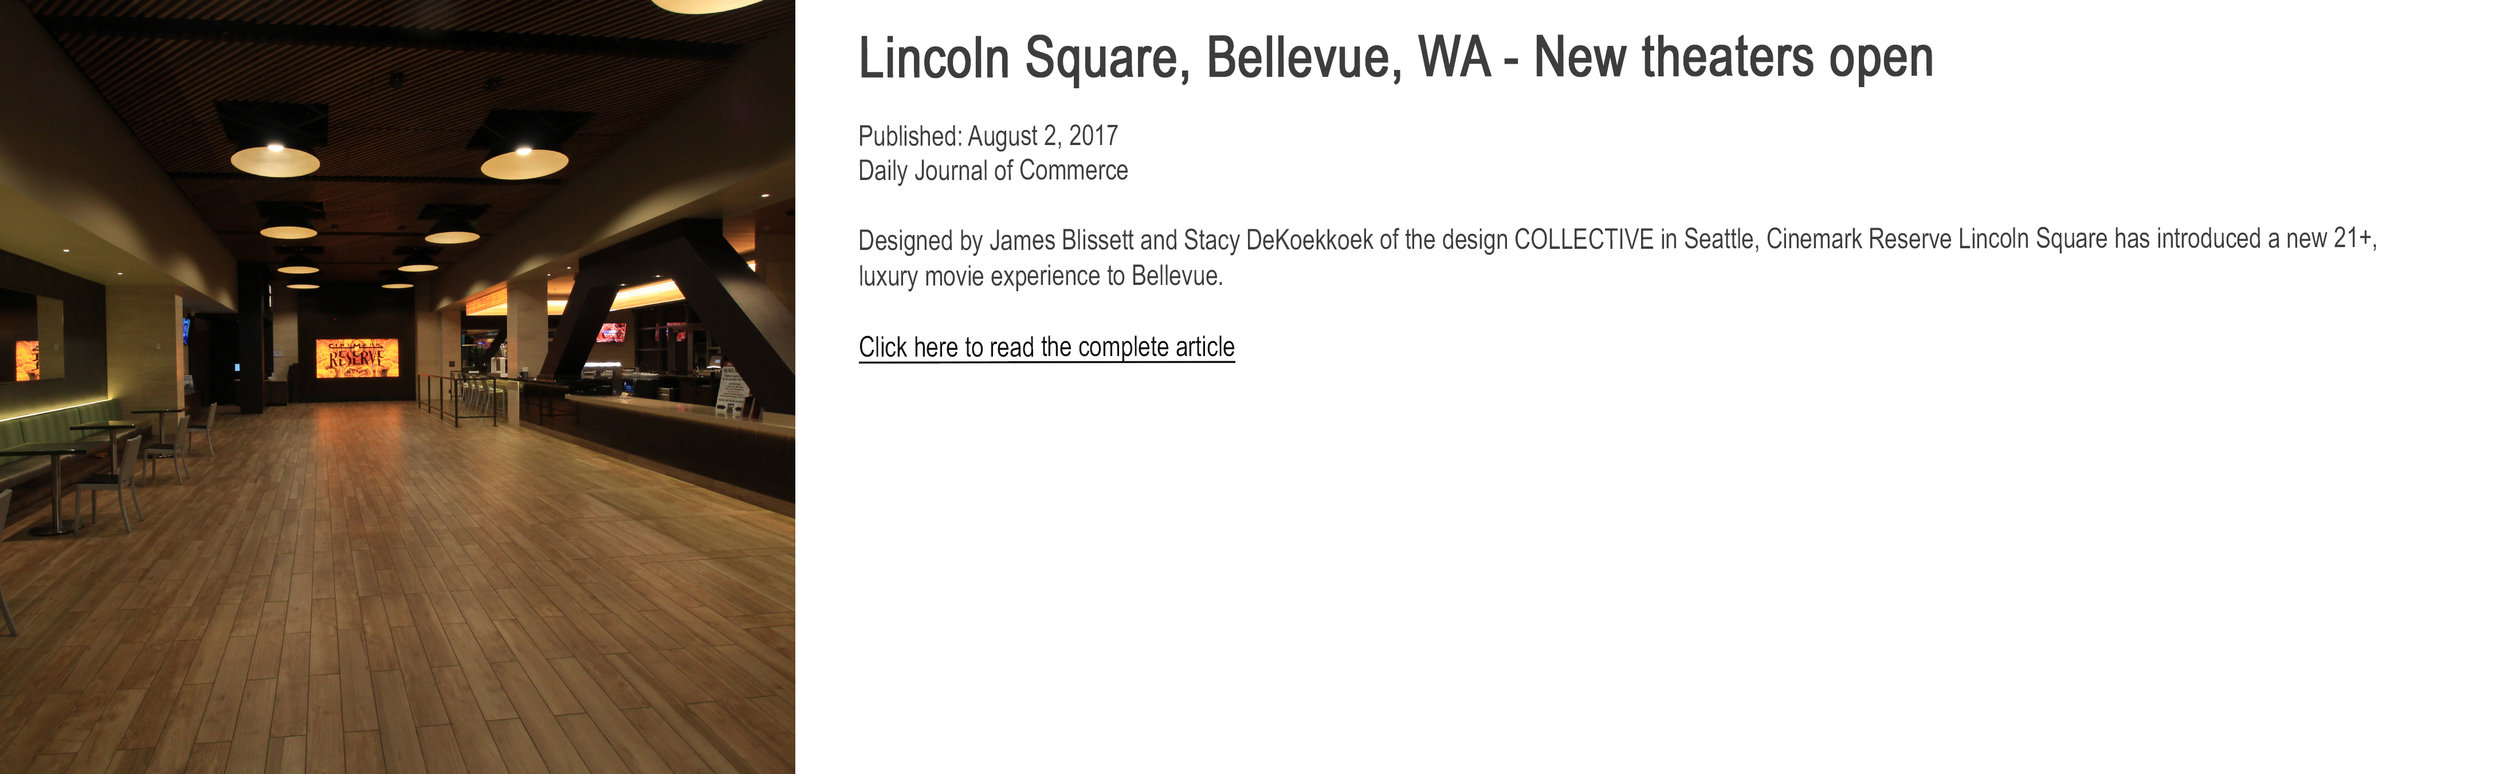 Lincoln Square - DJC.jpg